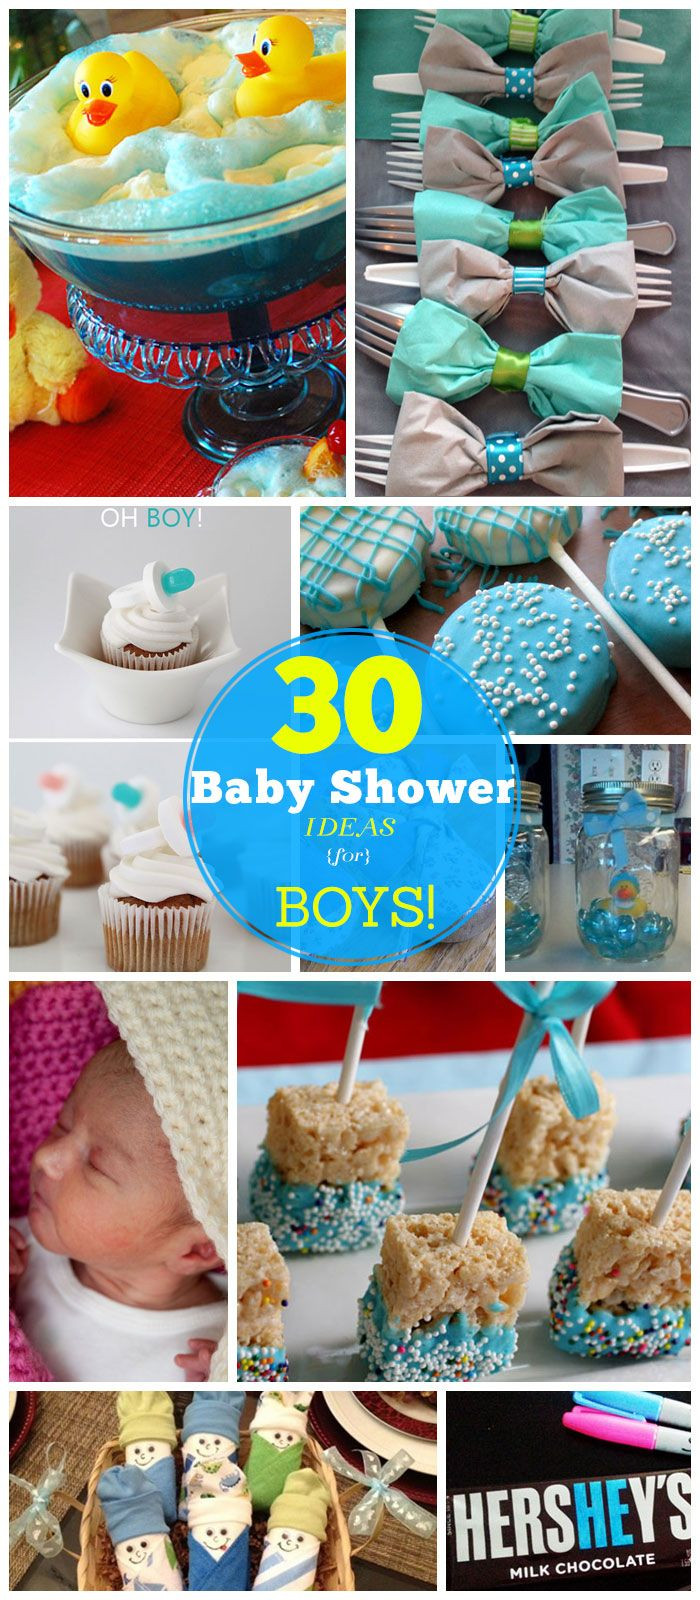 DIY Baby Shower Ideas
 20 DIY Baby Shower Ideas for Boys